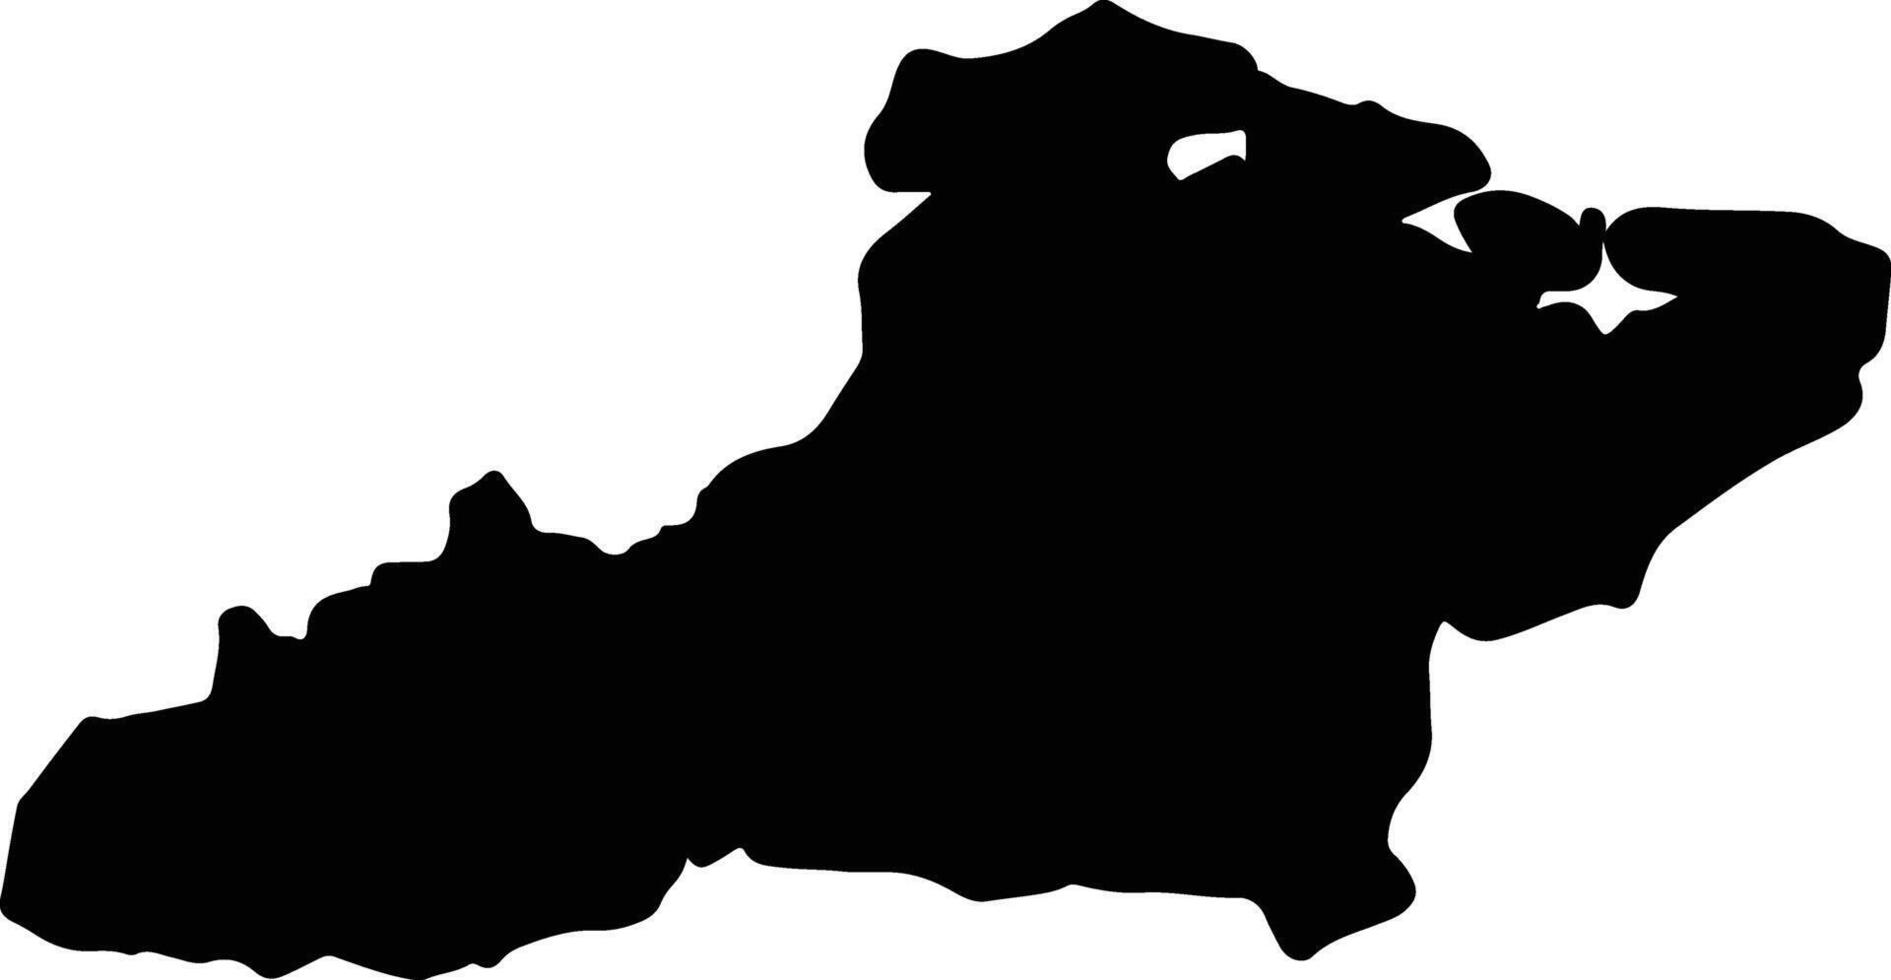 las tonijn Cuba silhouet kaart vector